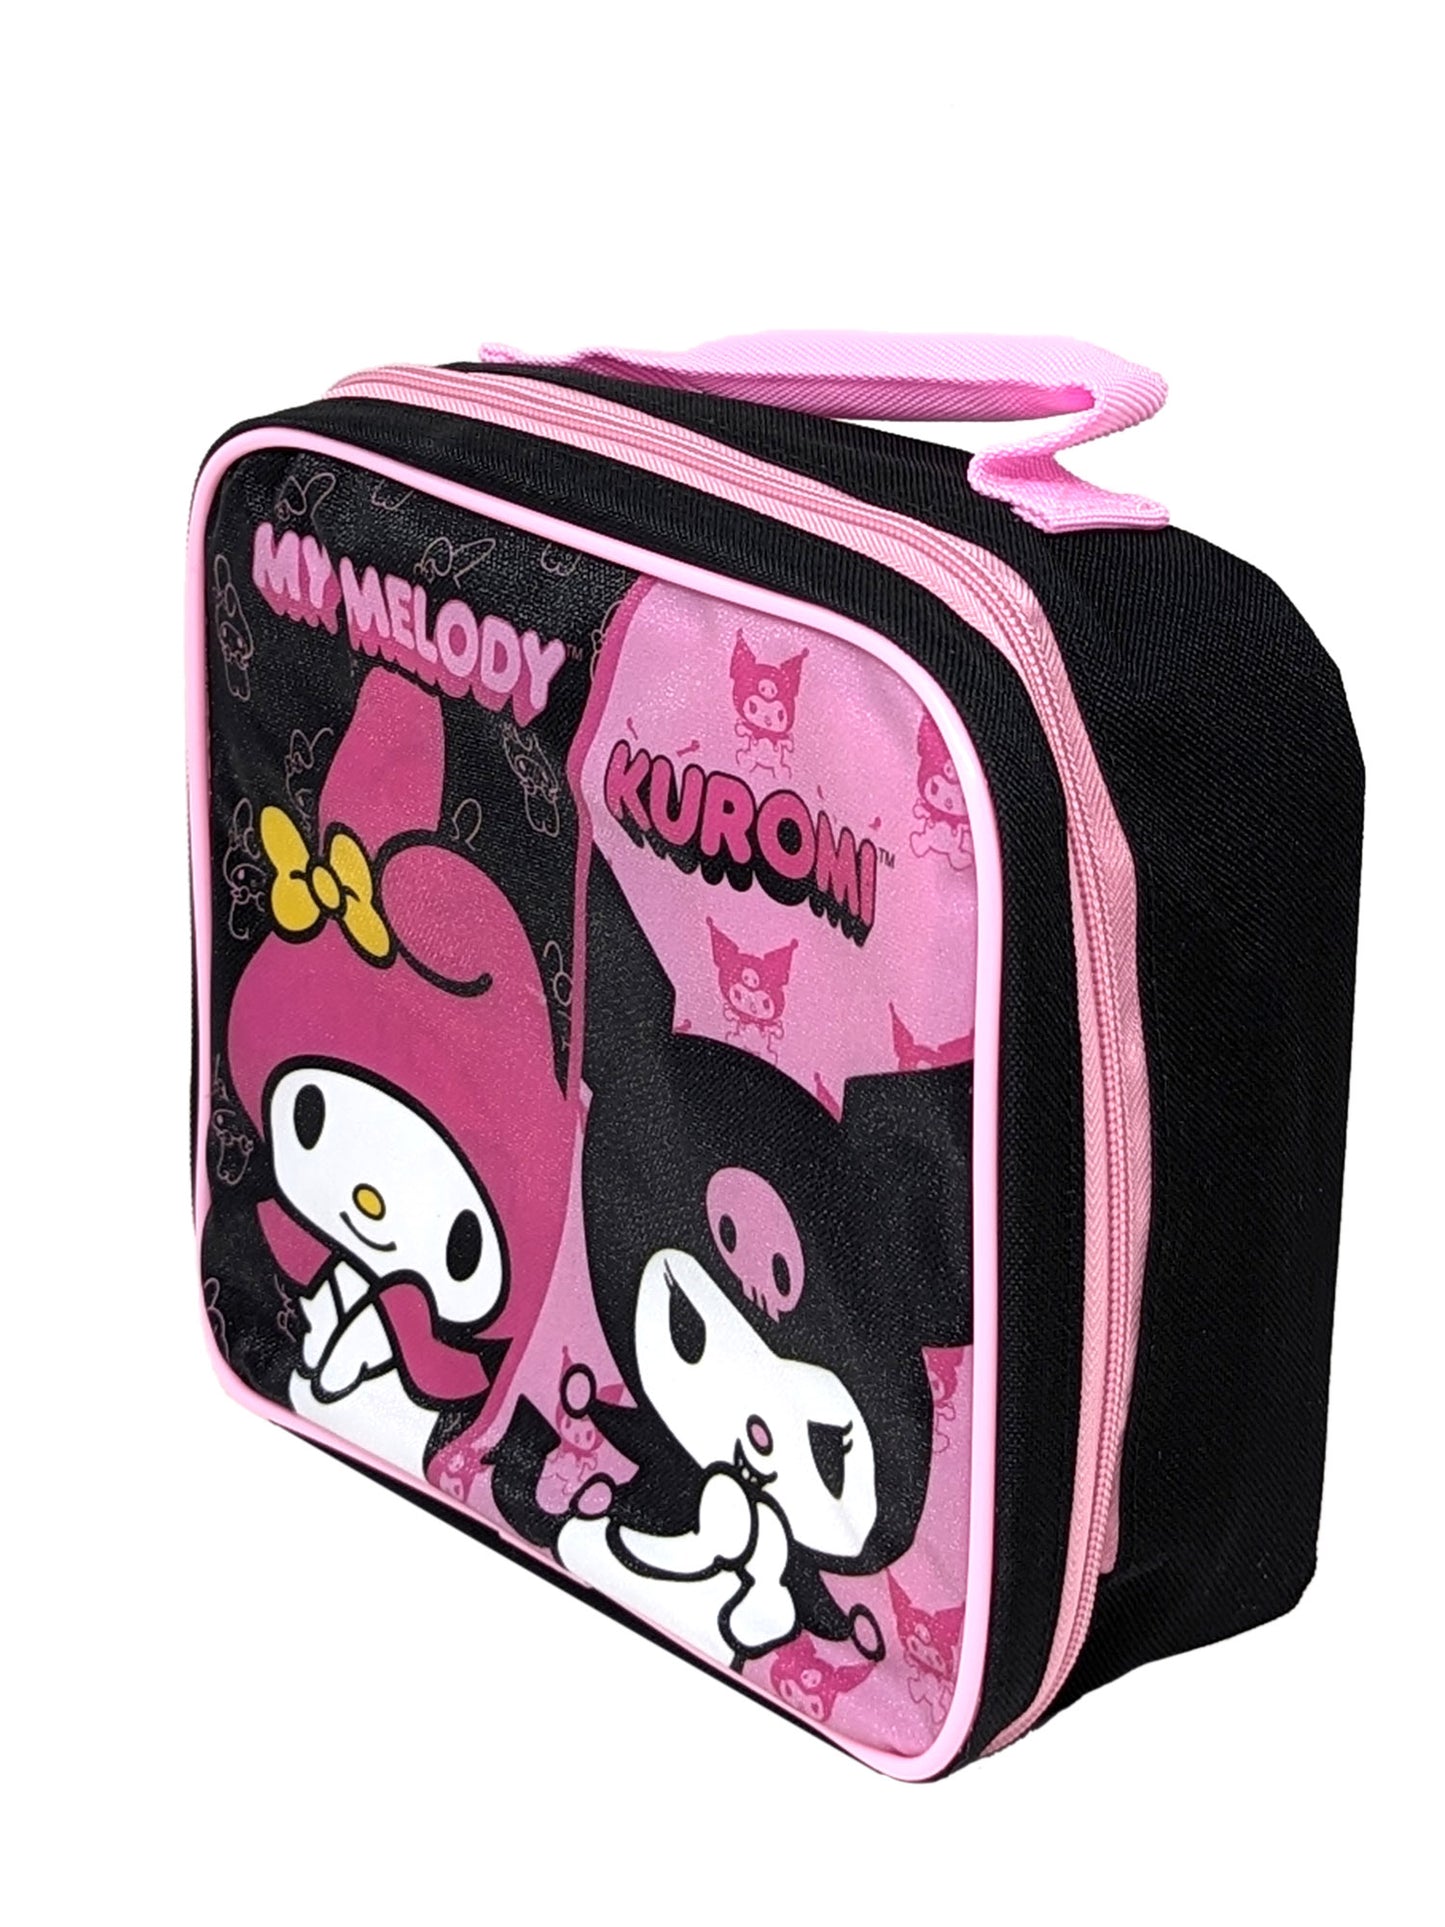 Hello Kitty My Melody Kuromi Lunch Bag Insulated Girls Sanrio Pink Black